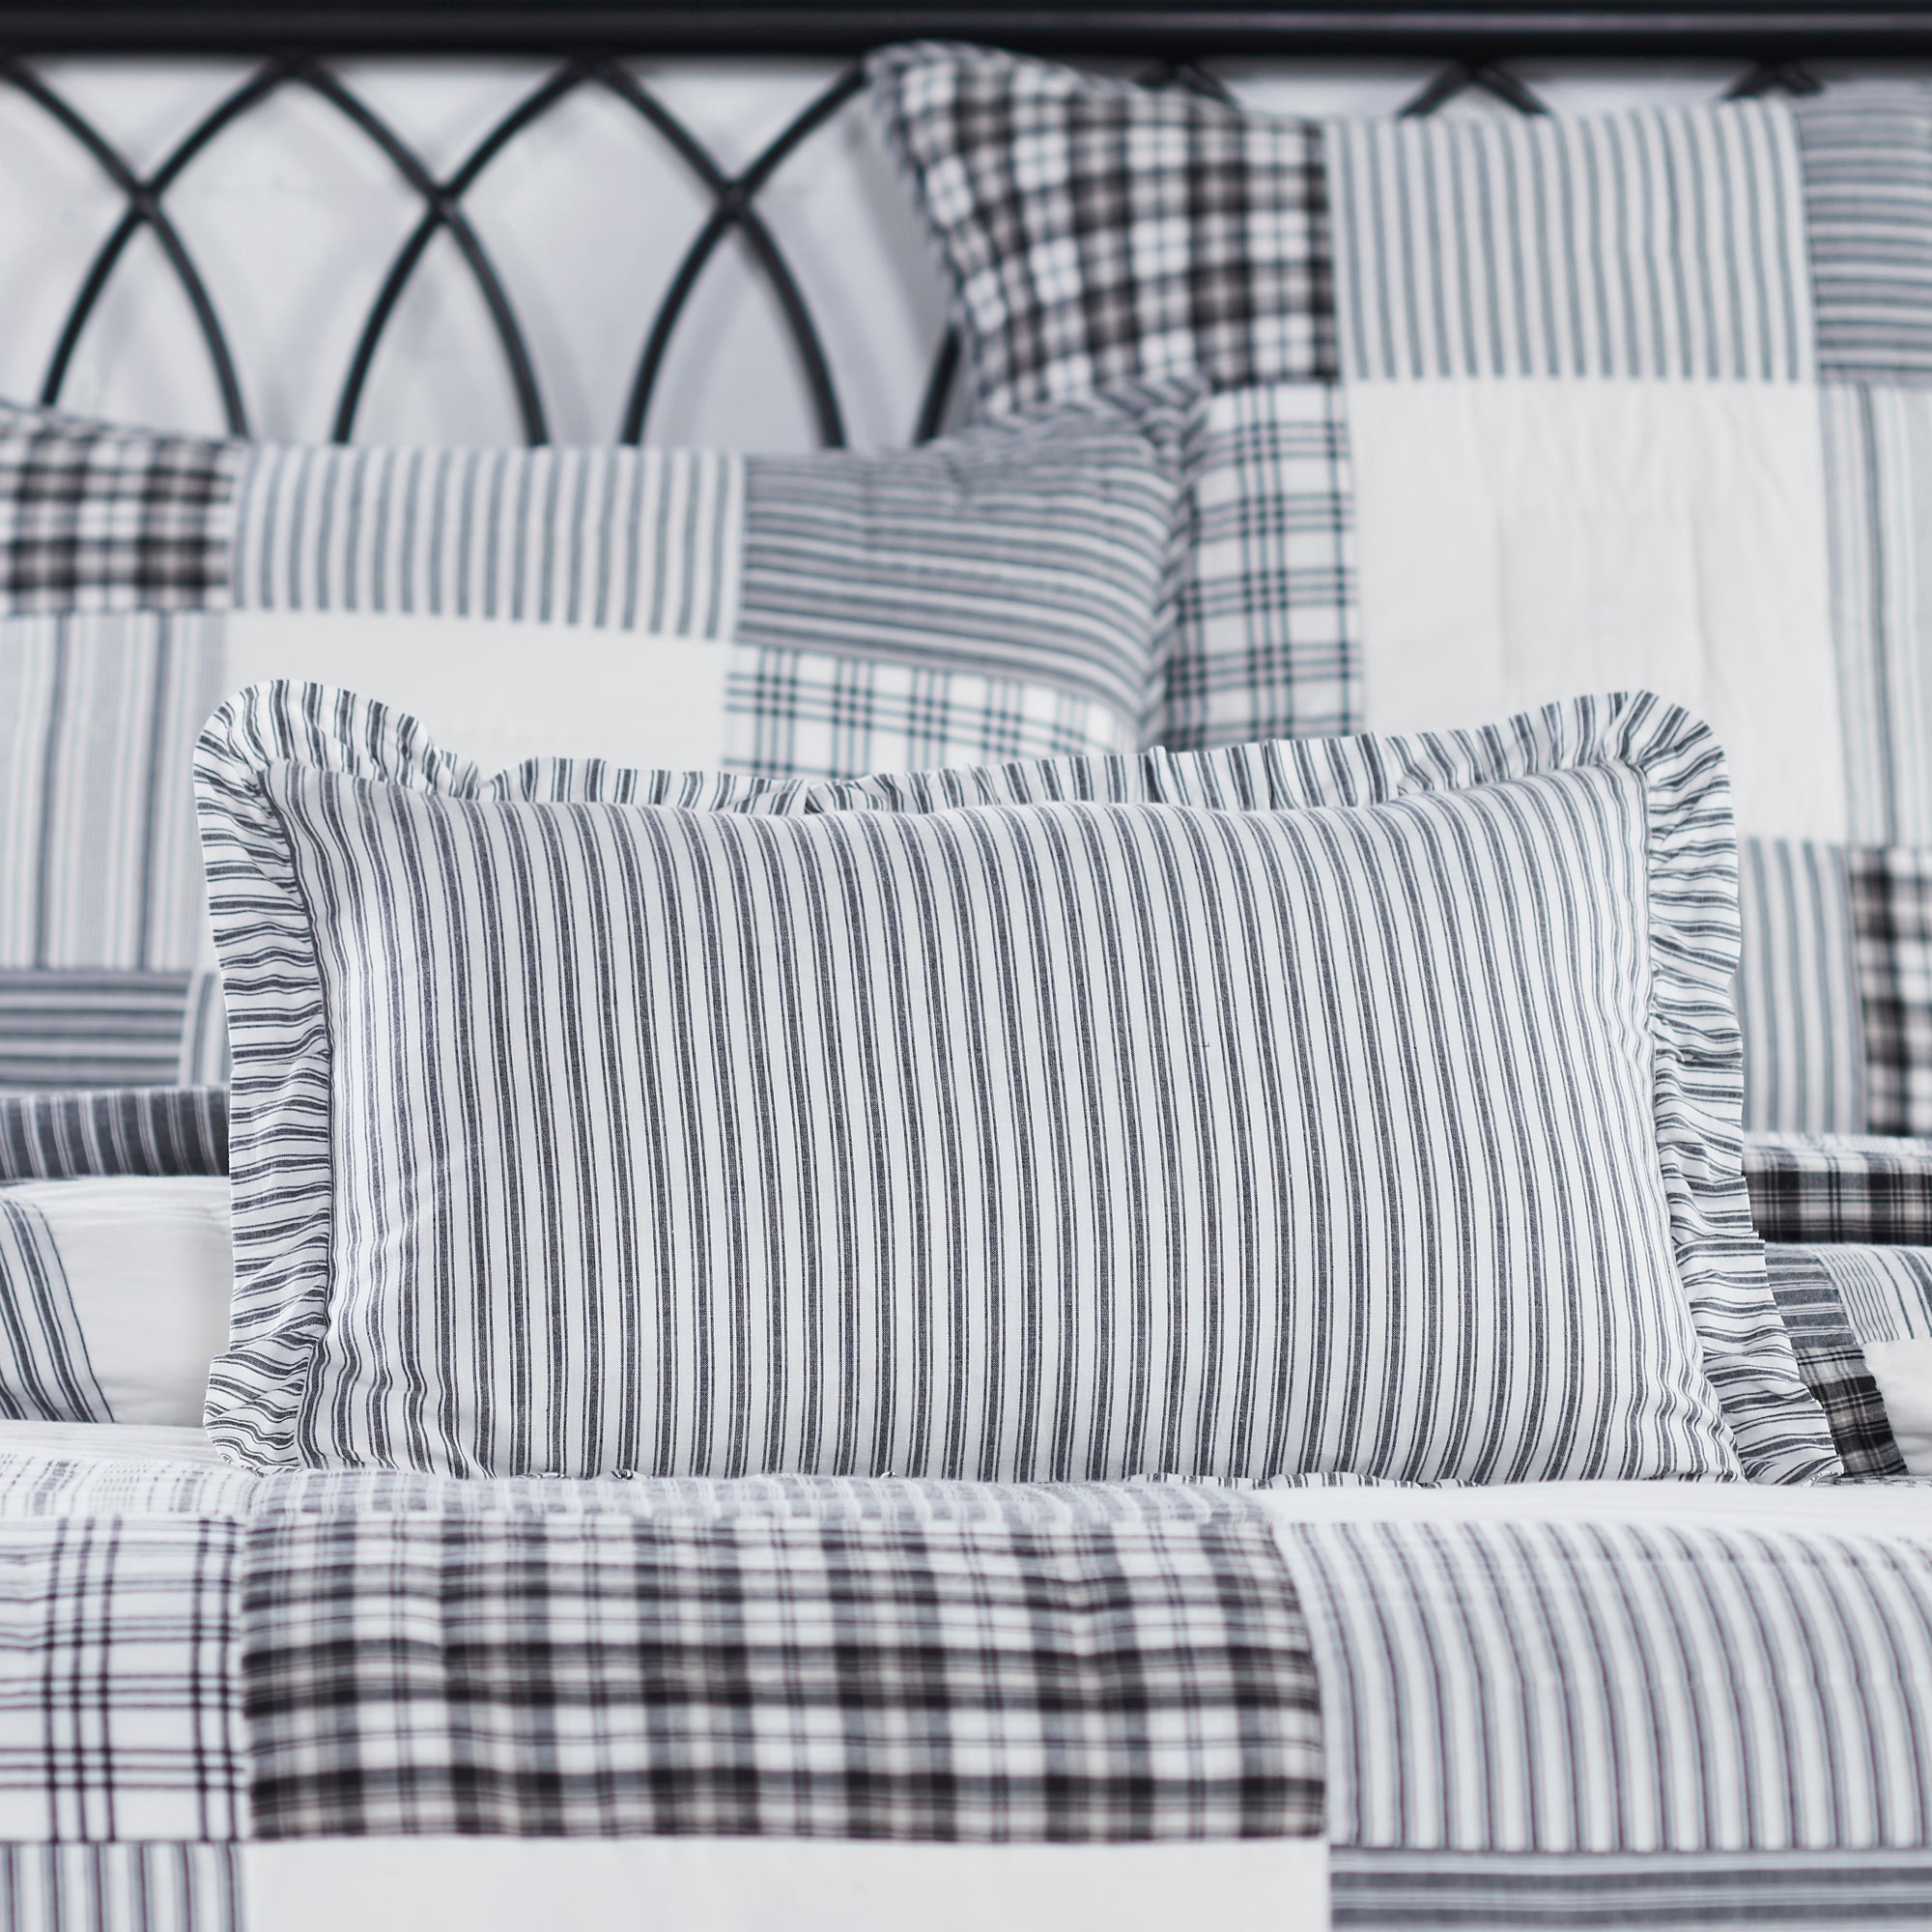 Sawyer Mill Black Ruffled Ticking Stripe Pillow 14x22 VHC Brands